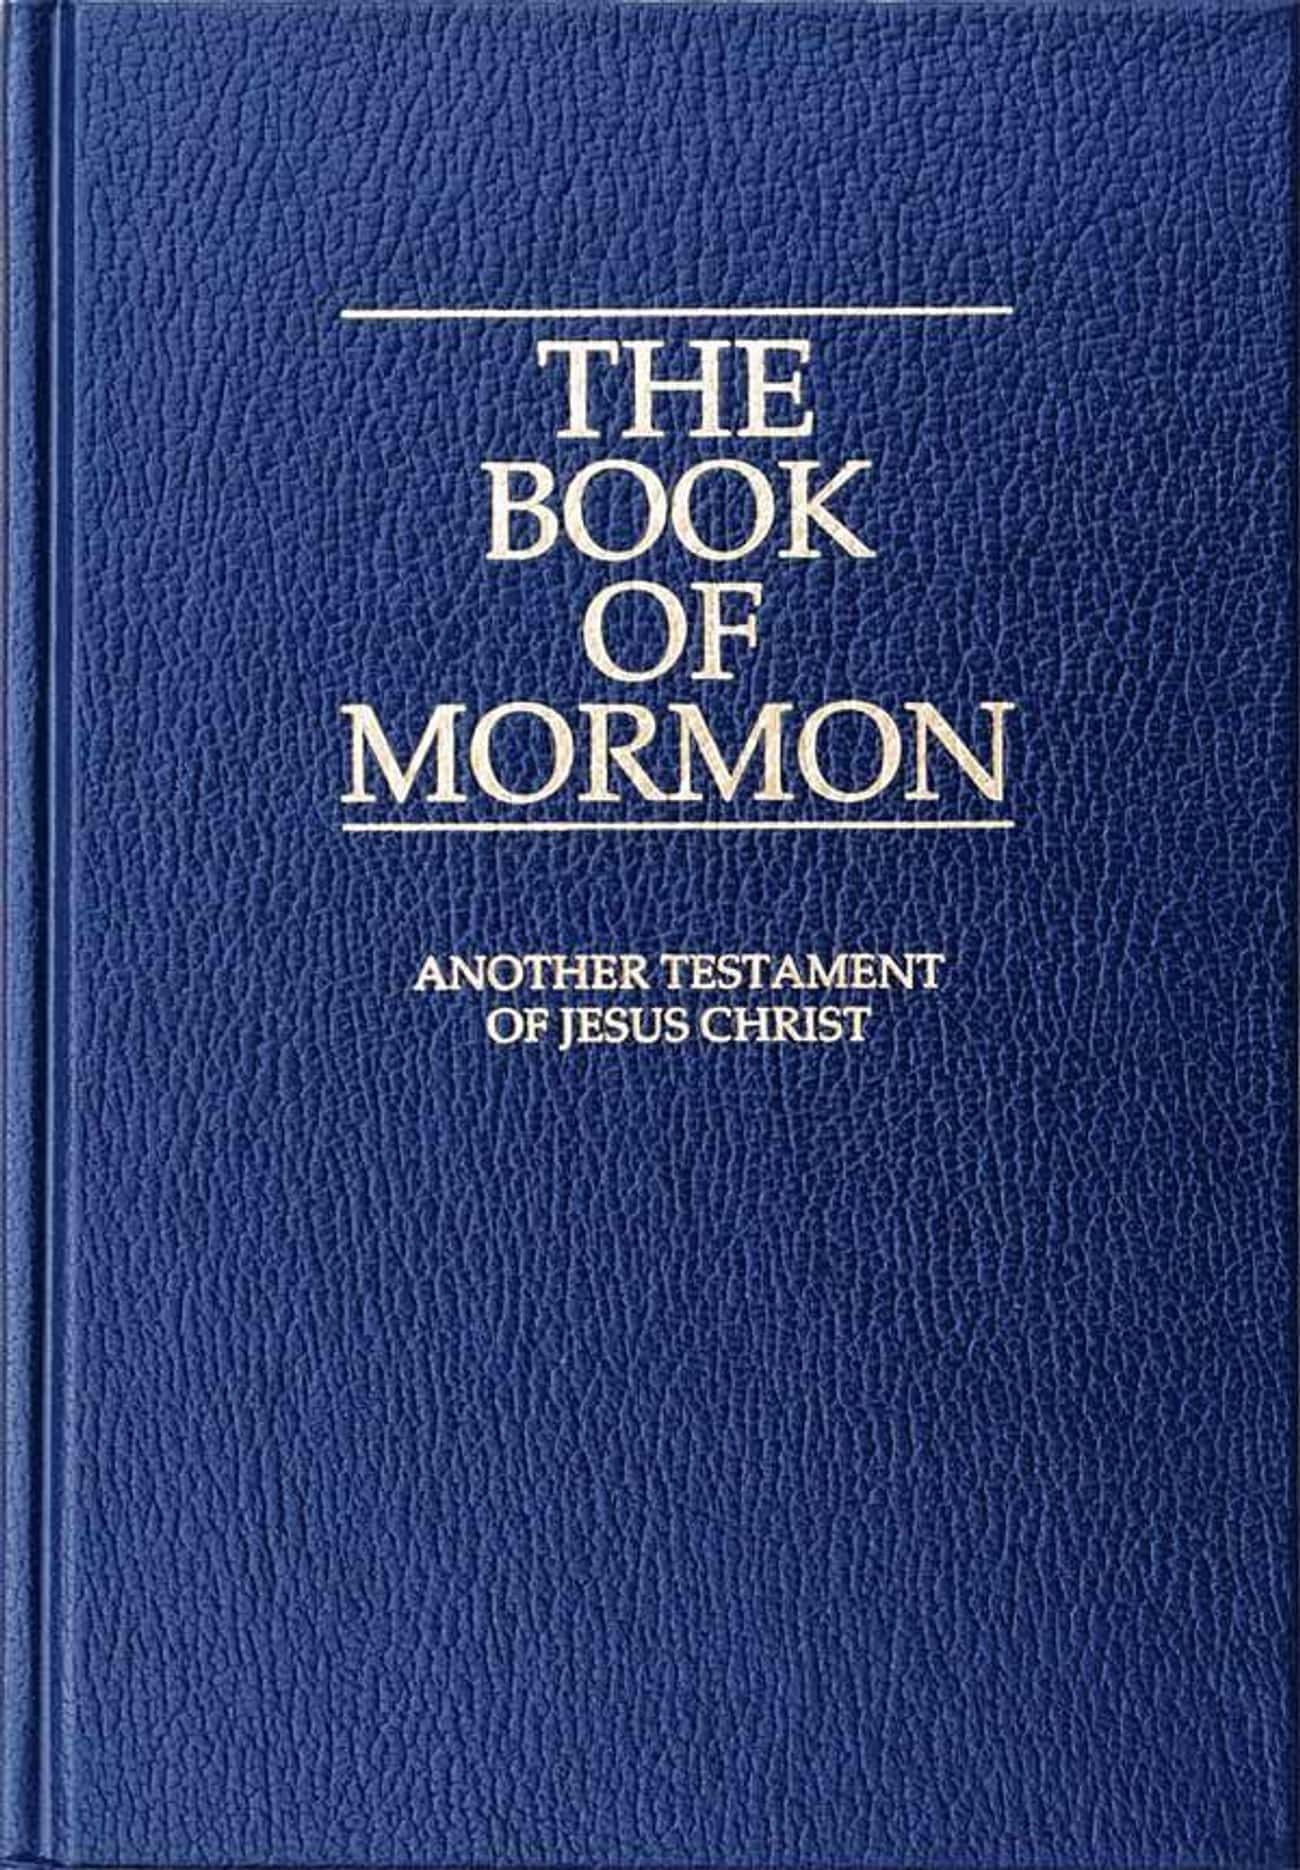 Missouri Banned Mormons Until 1976